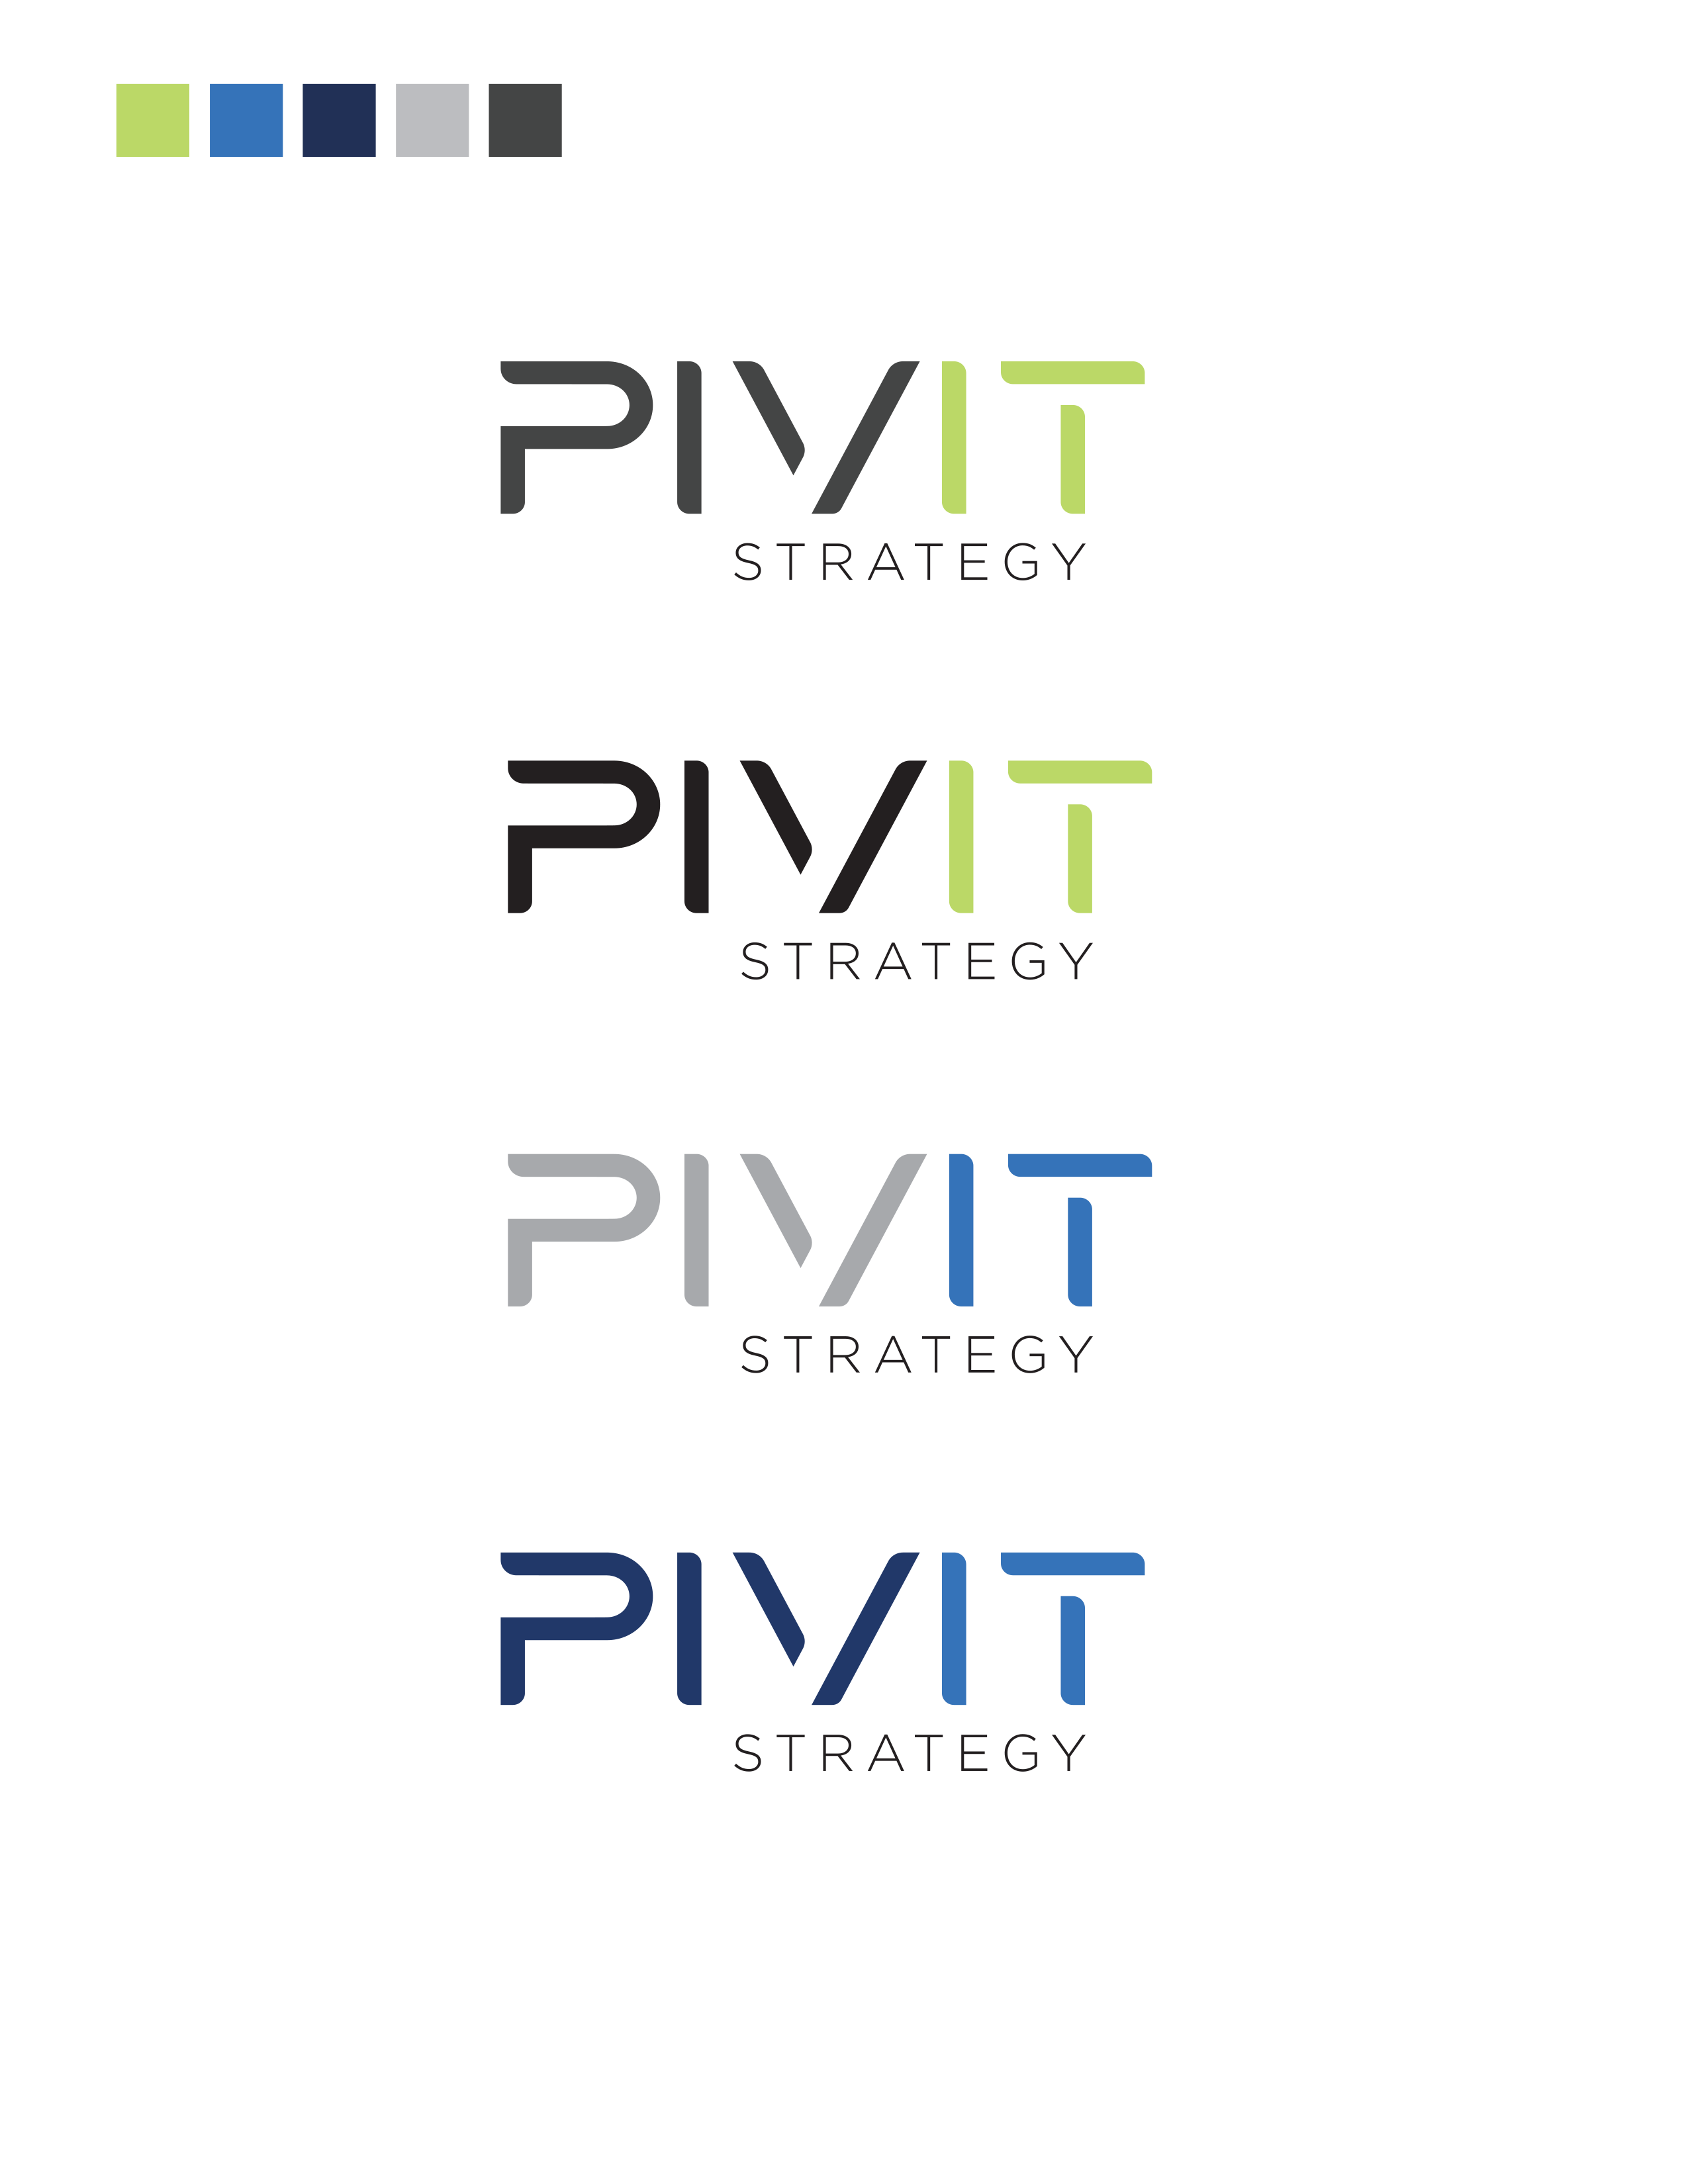 PivIT Strategy